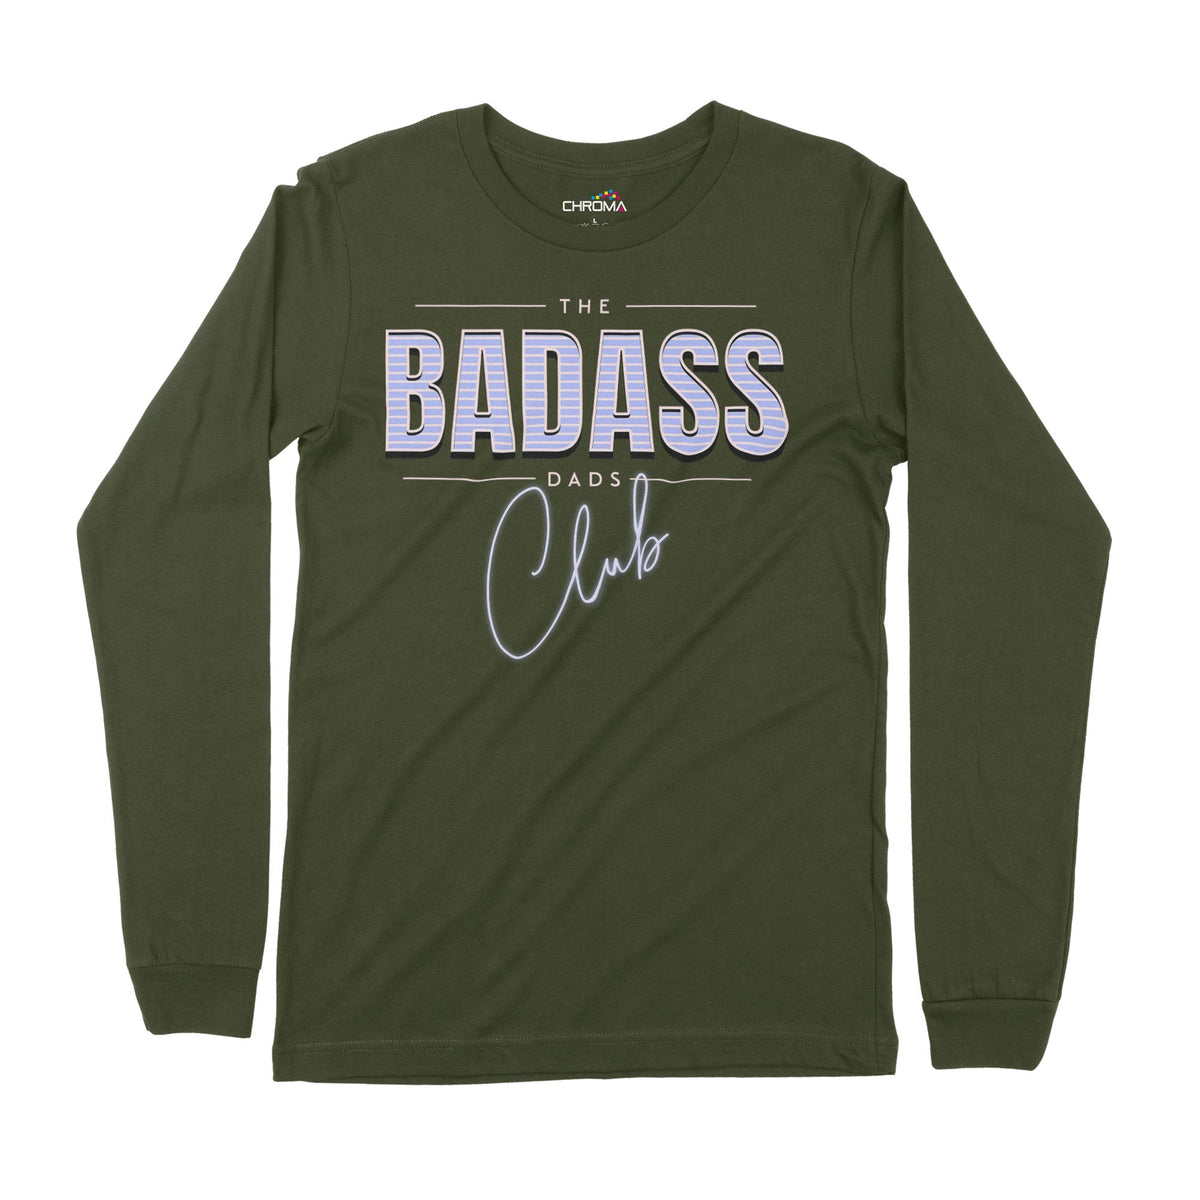 The Badass Dad's Club | Long-Sleeve T-Shirt | Premium Quality Streetwe Chroma Clothing